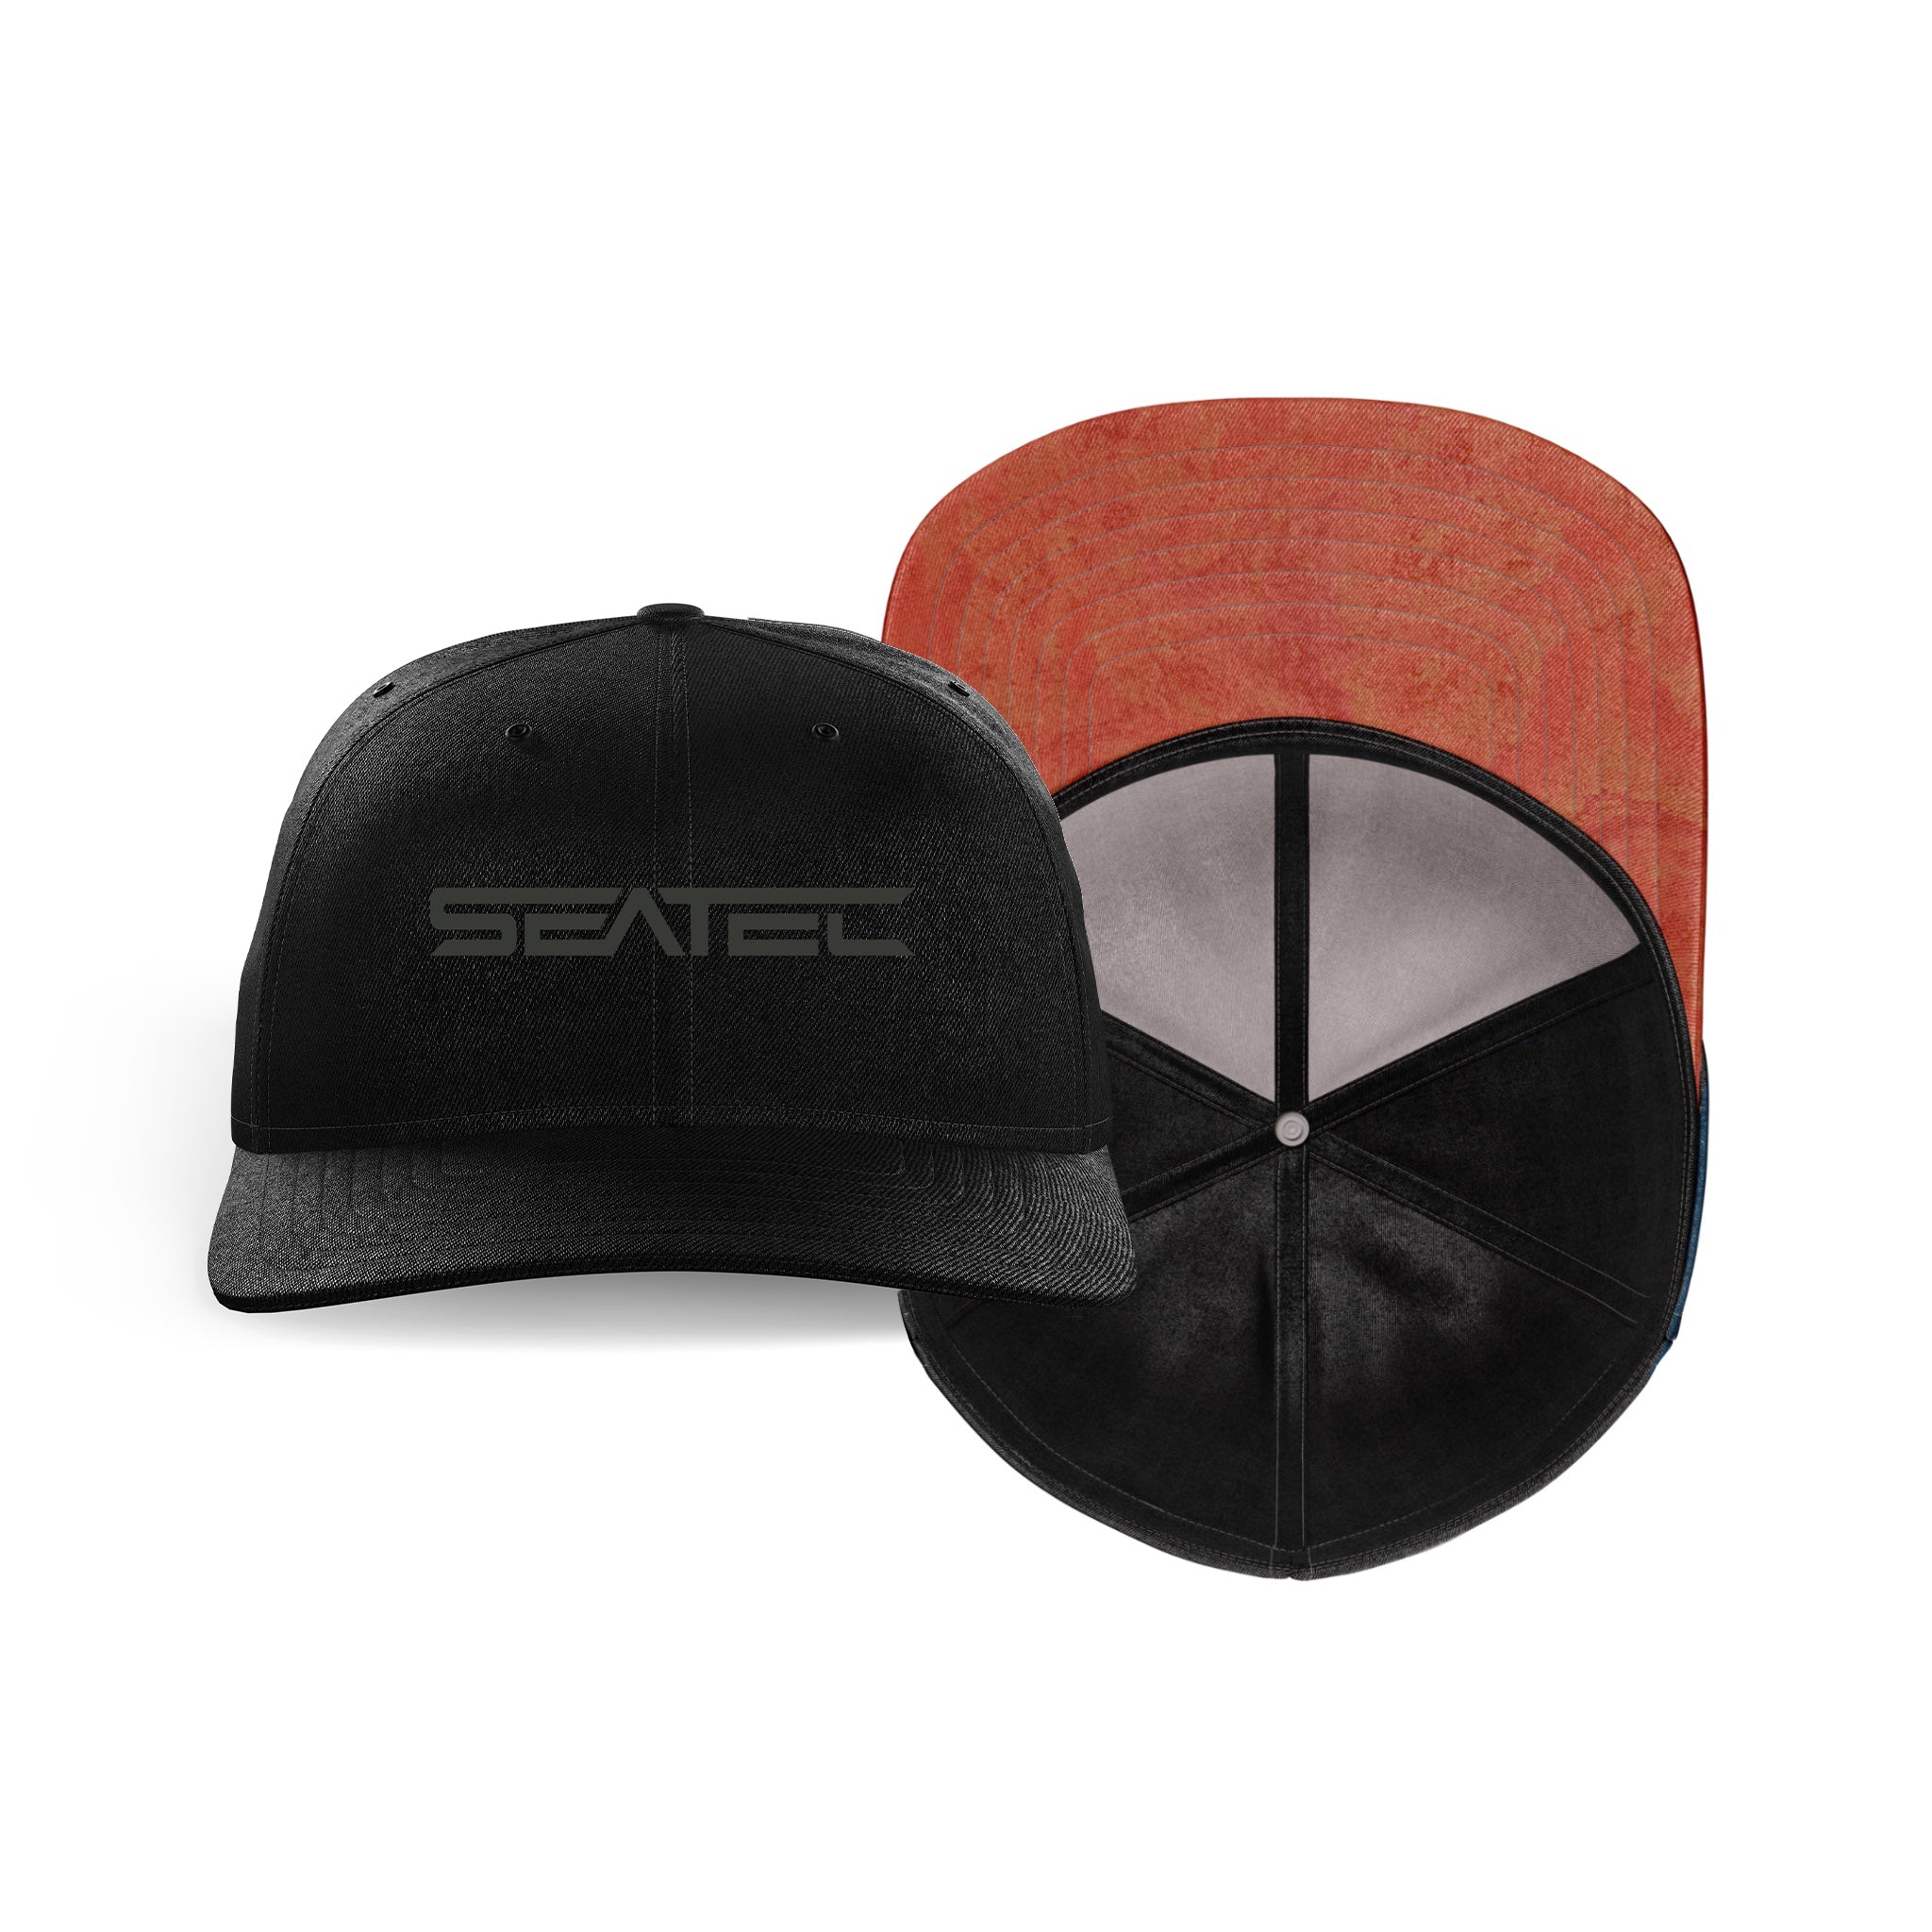 Seatec Outfitters White Marlin Mesh Snapback Cap, Tri Tec Performance Headwear